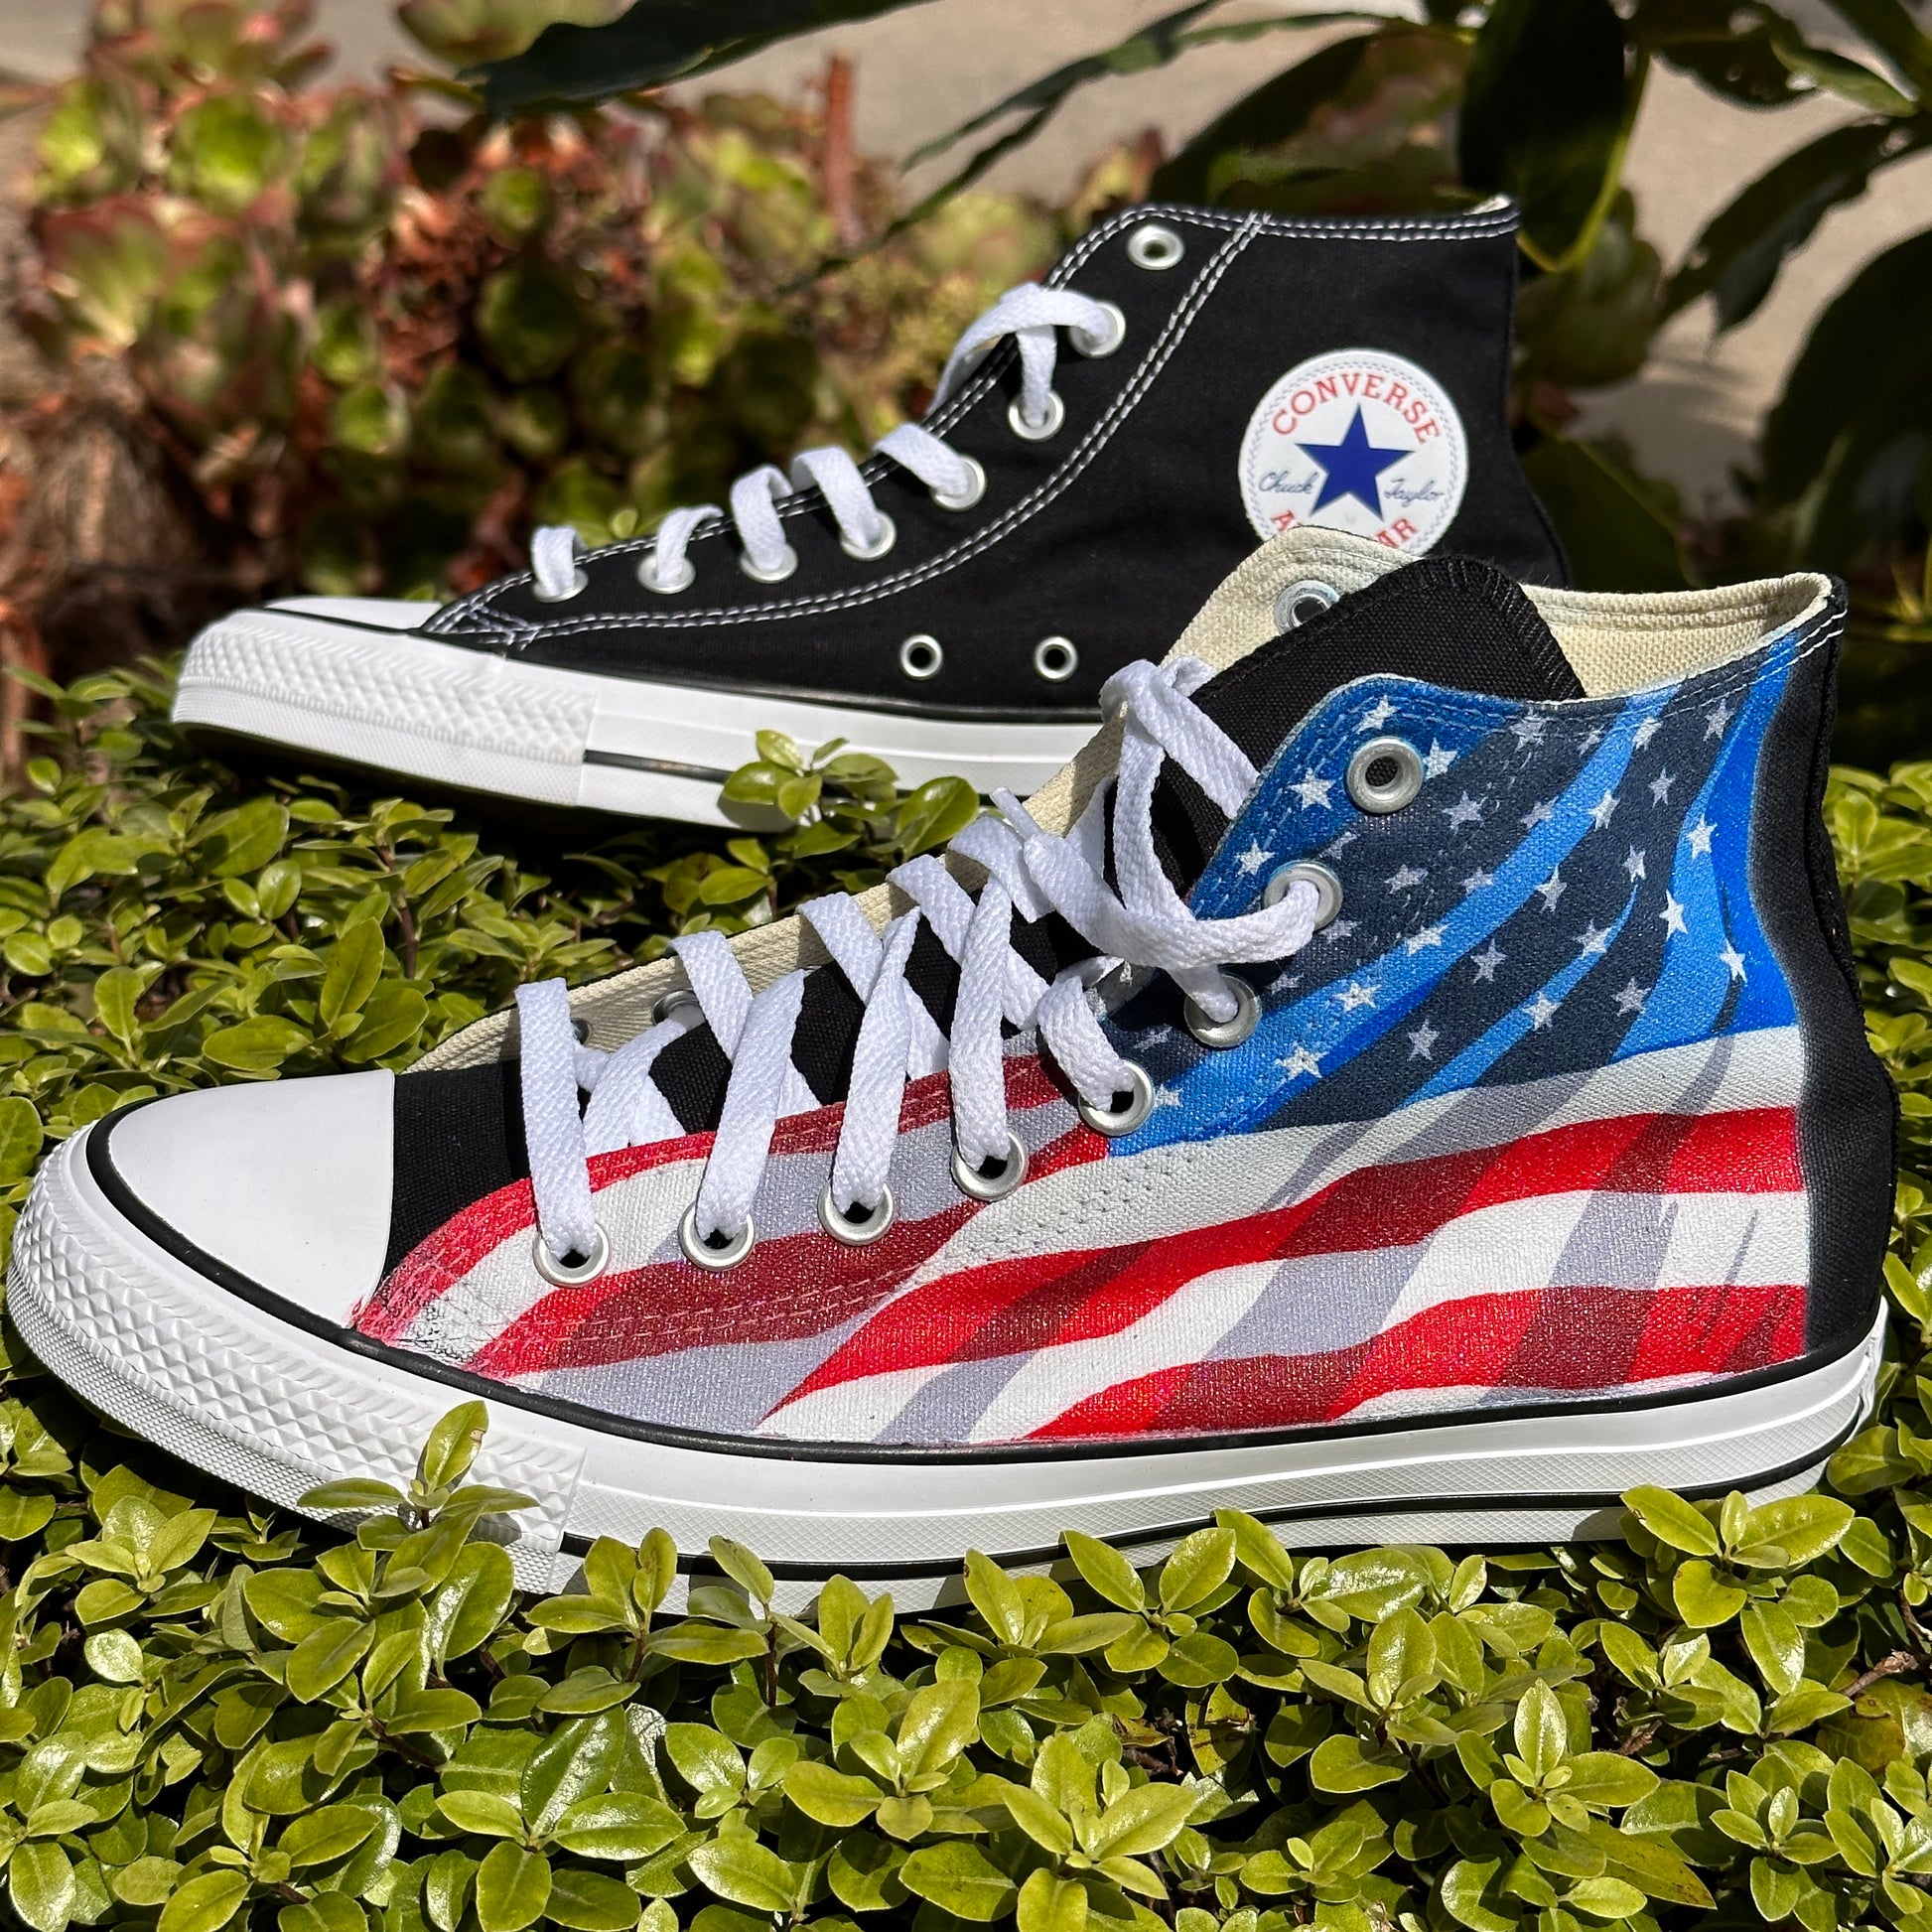 USA American Flag Theme Custom Converse High Top Sneakers